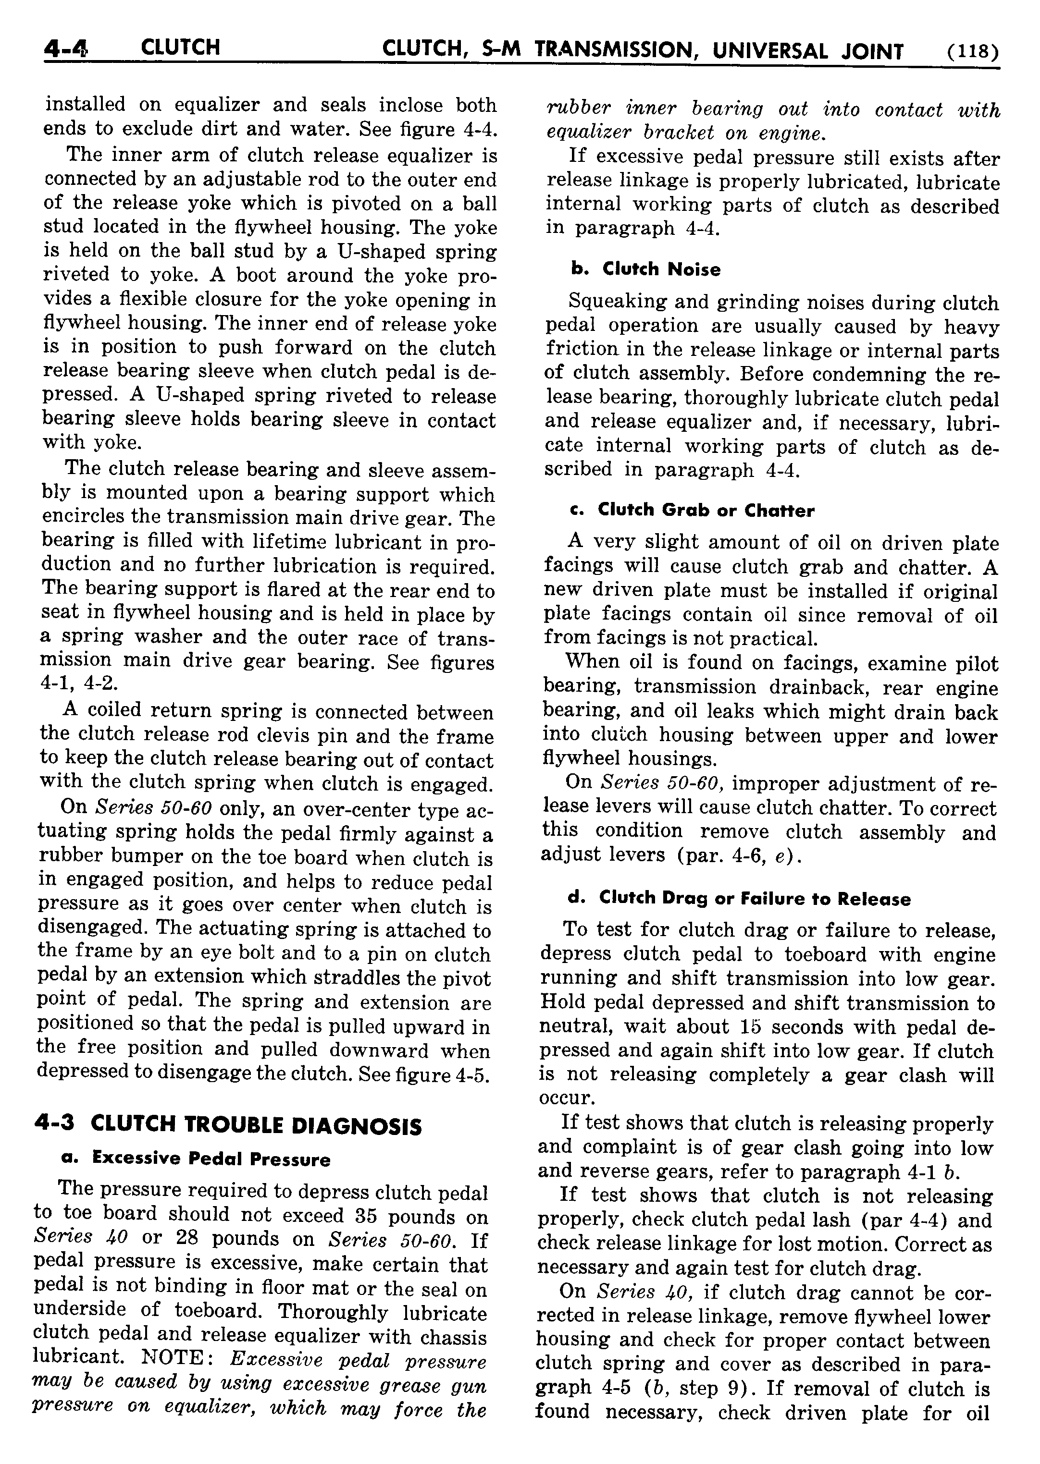 n_05 1955 Buick Shop Manual - Clutch & Trans-004-004.jpg